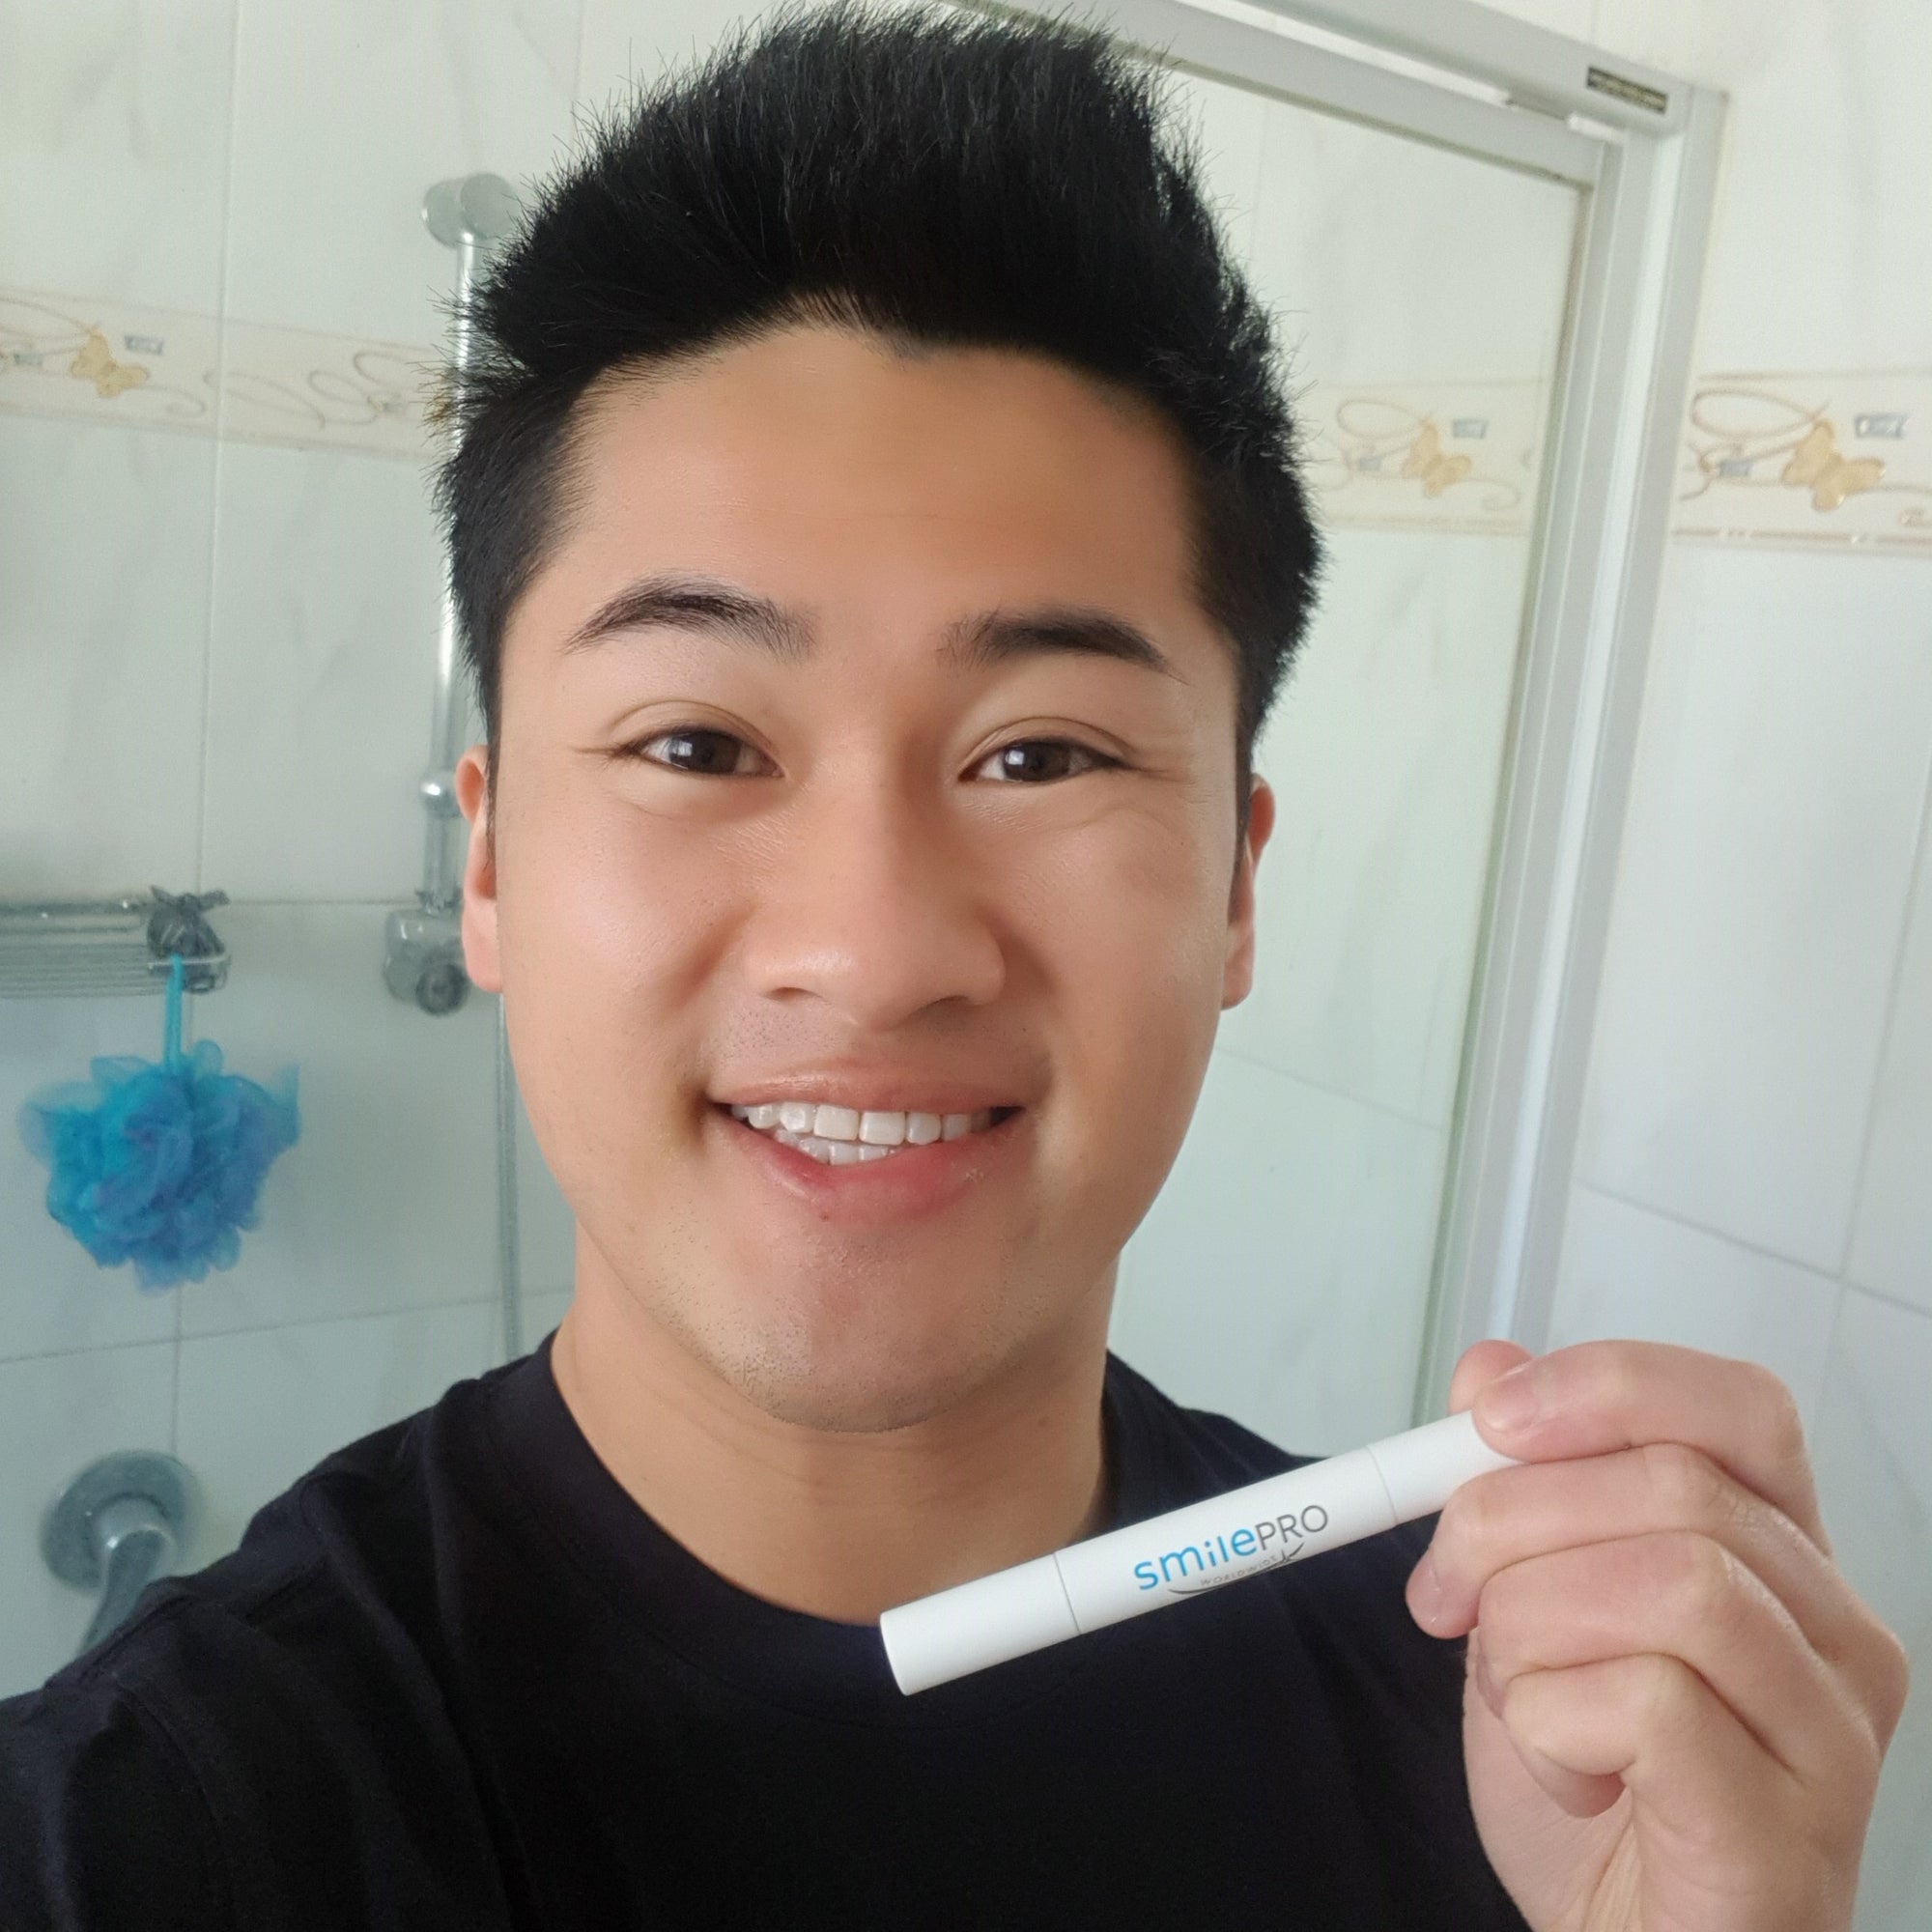 Cheap teeth whitening kit, delivers across Australia.